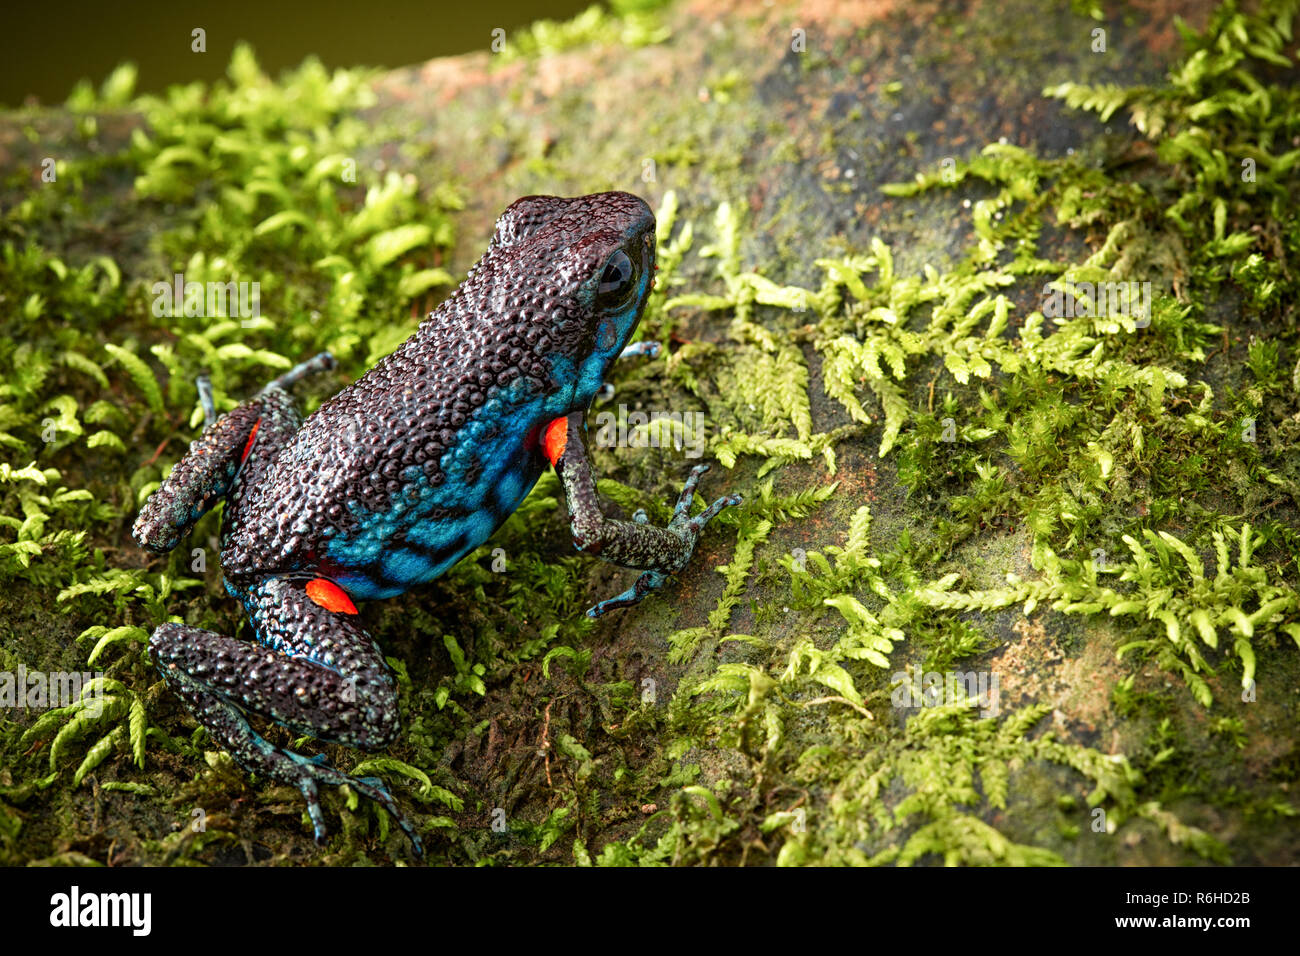 poisonous dart frog, Ameerega ingeri a dendrobatidae amphibian from the tropical Amazon rain forest in Colombia. Poisonous animal. Stock Photo